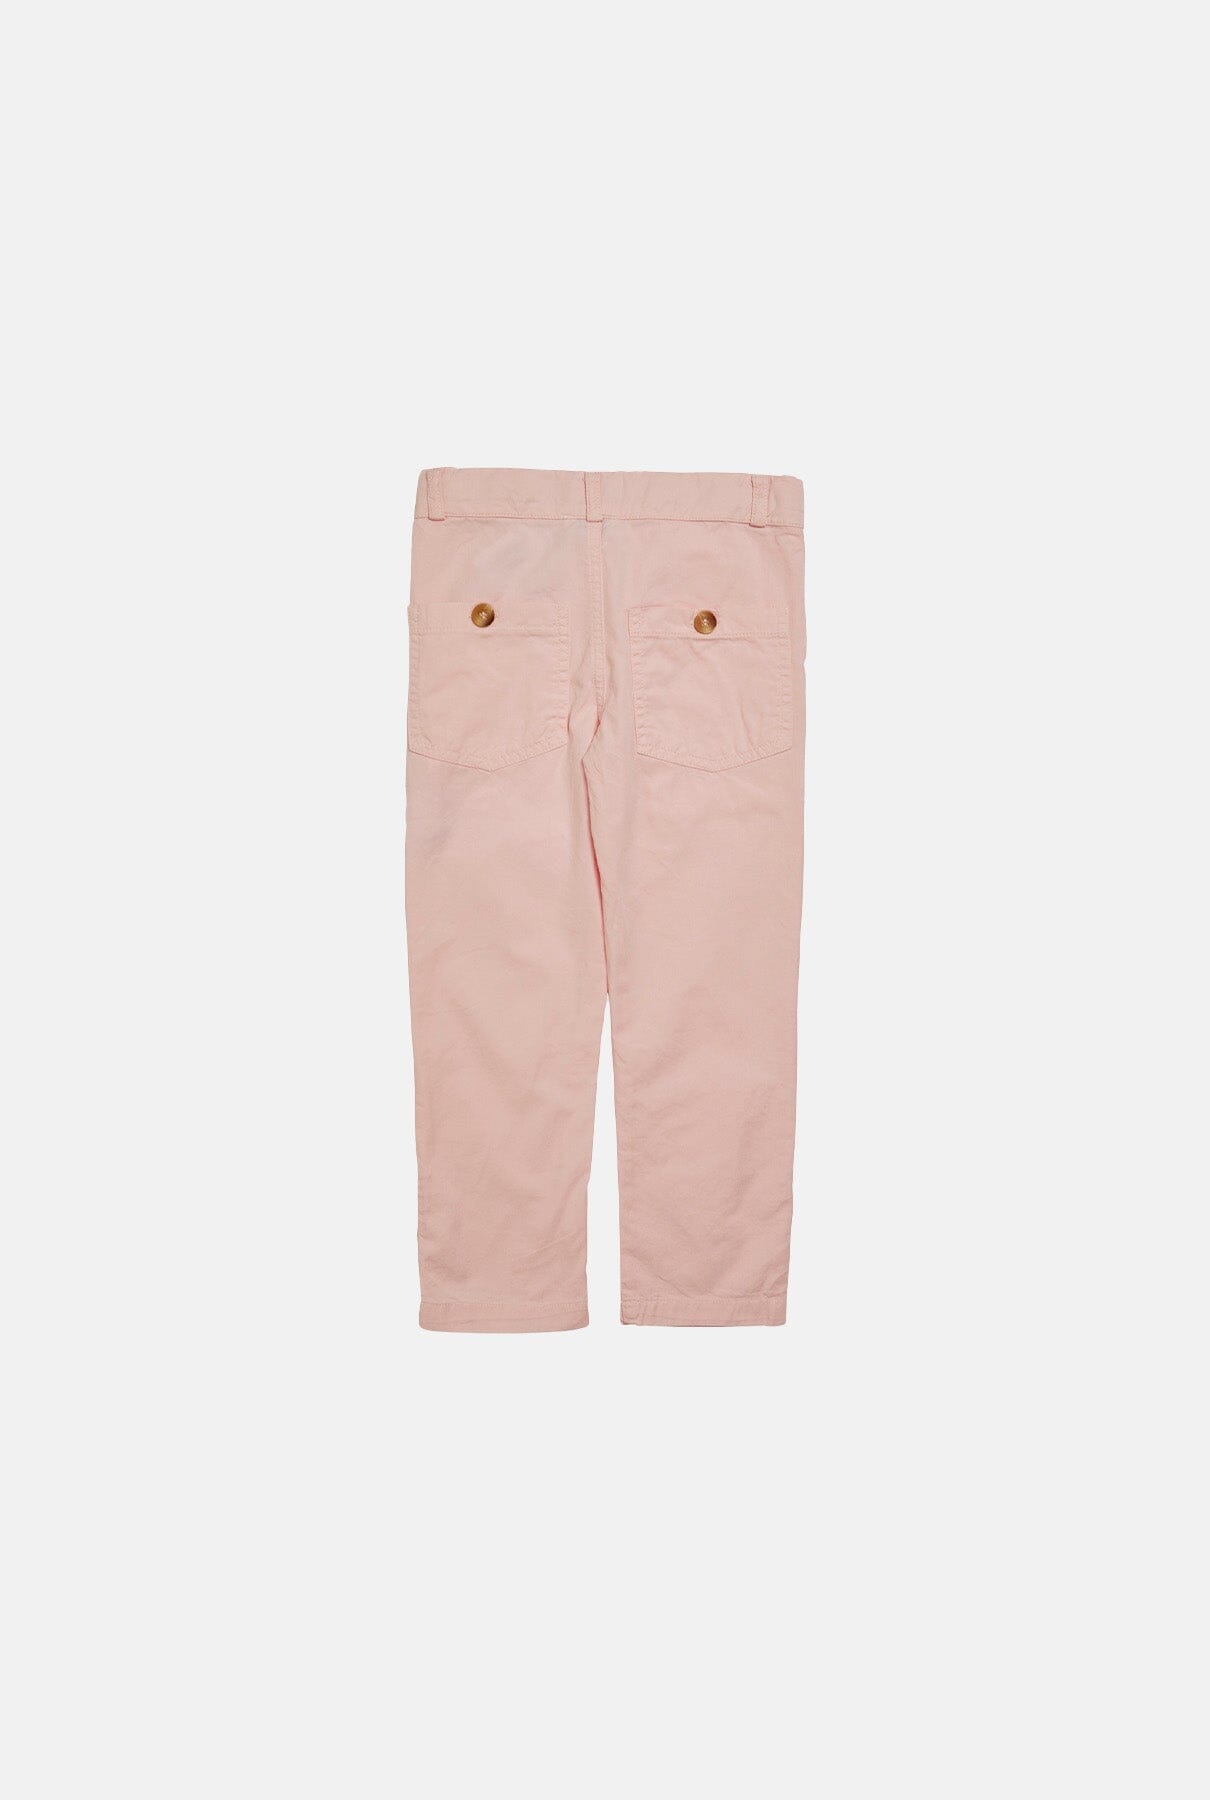 Celeste Trousers Dusty Pink Kids Clothing Amaia London 